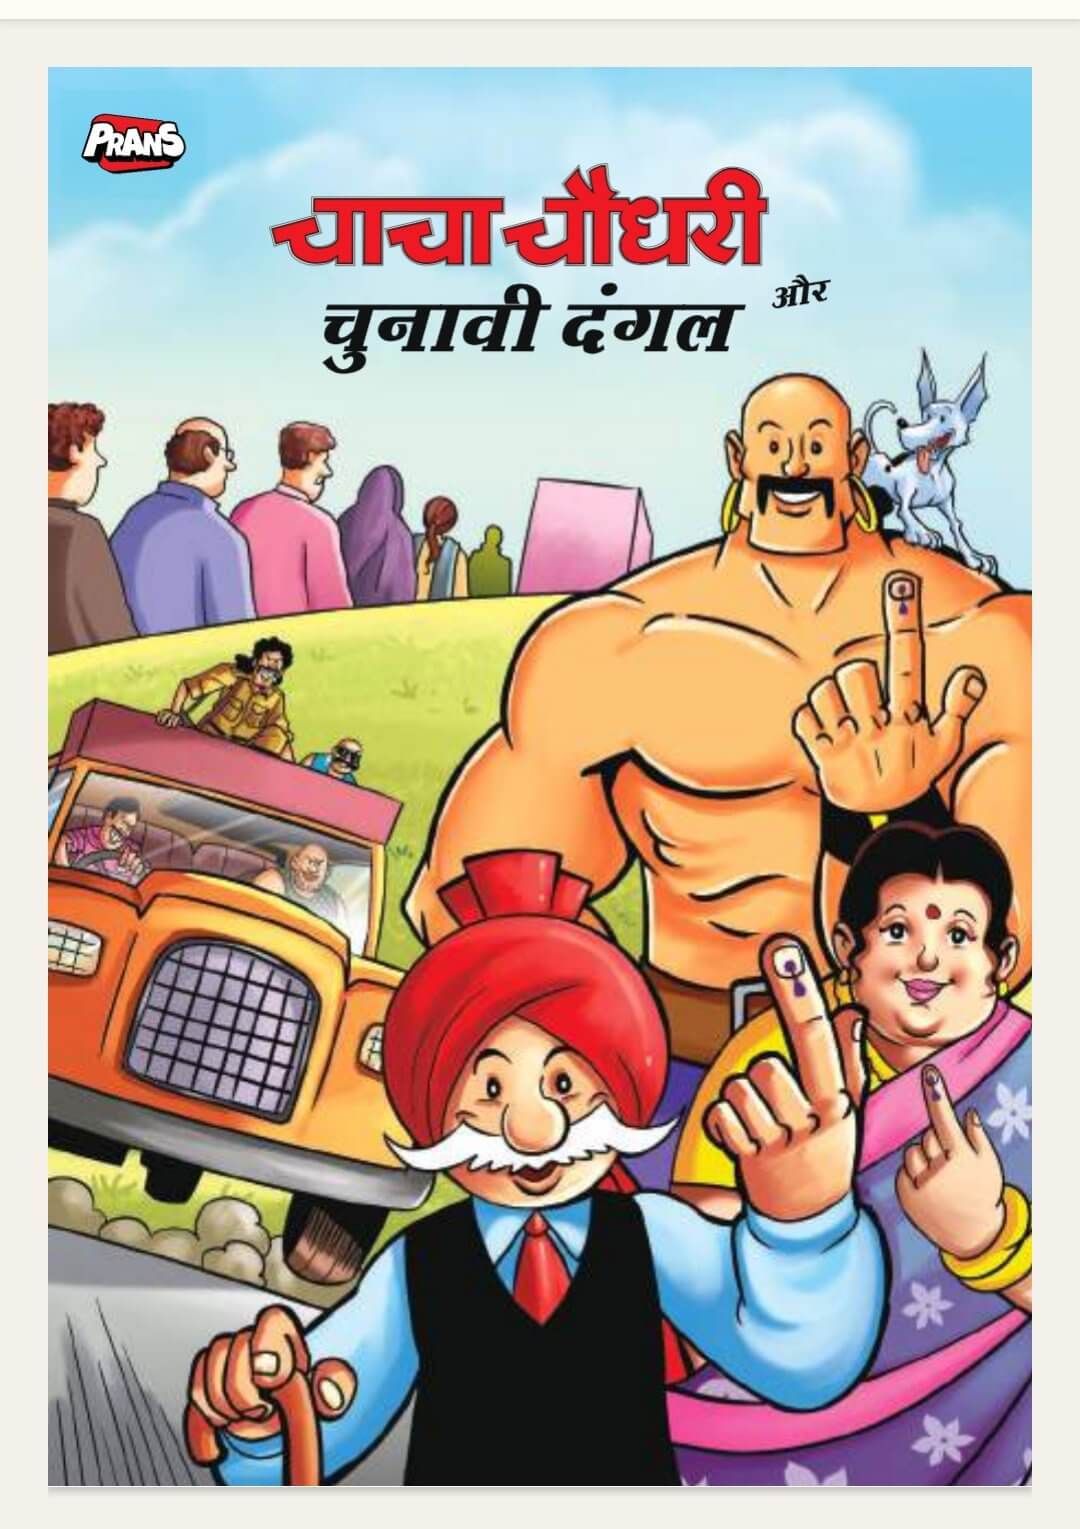 ECI Releases 'Chacha Chaudhary aur Chunavi Dangal' Comic Book